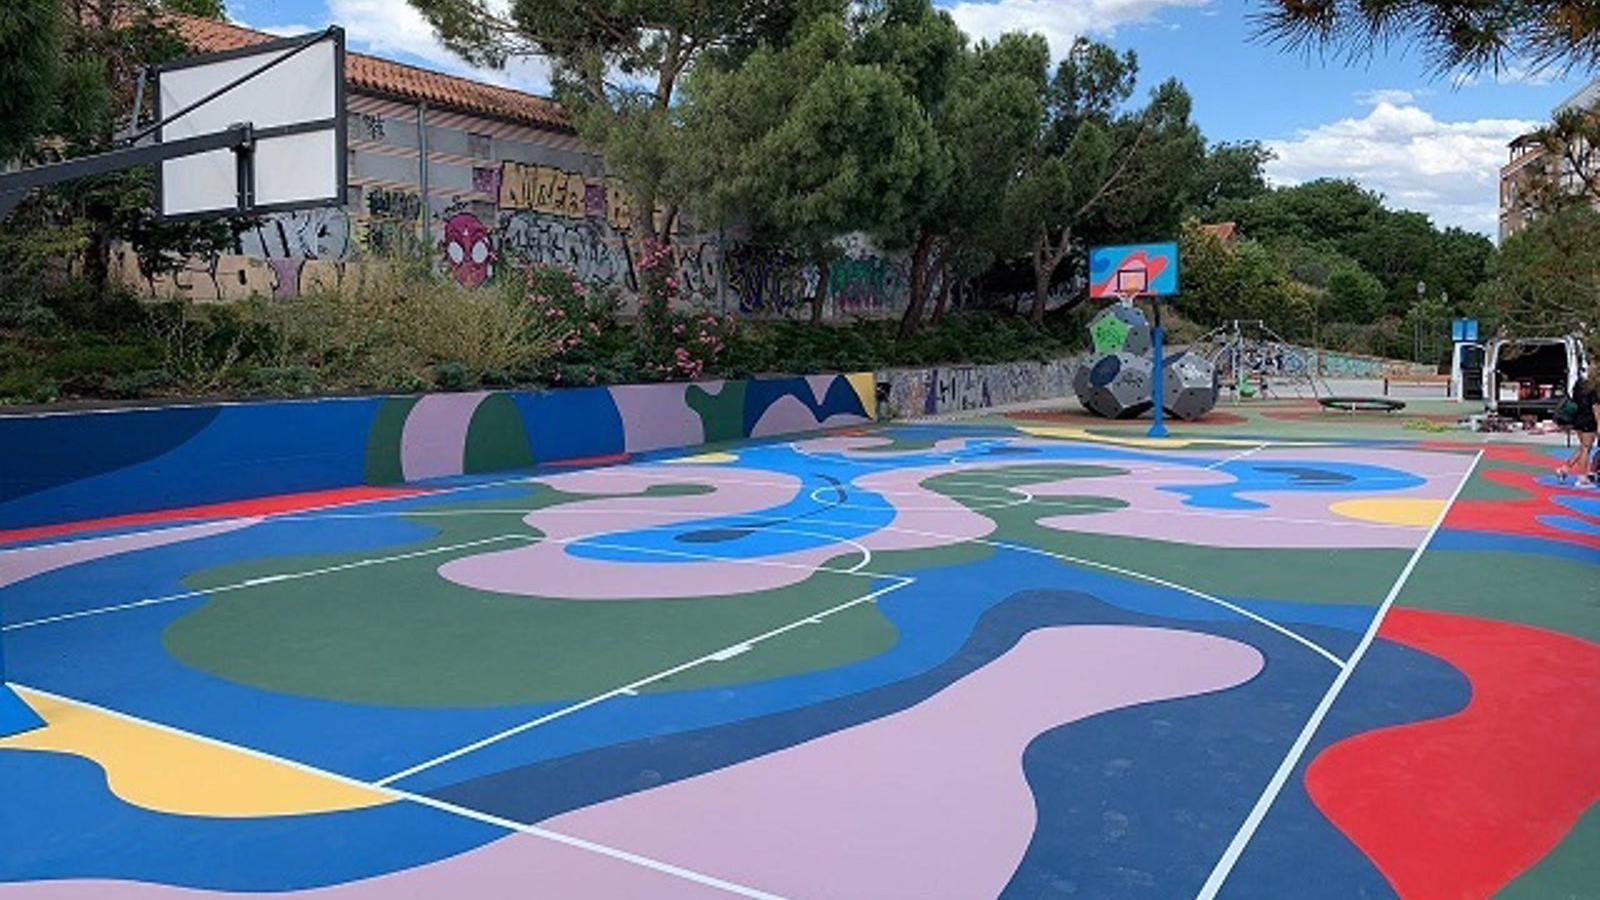 La pista de baloncesto de la instalación deportiva Poeta Esteban Villegas estrena diseño de la artista Mikhaela Martín